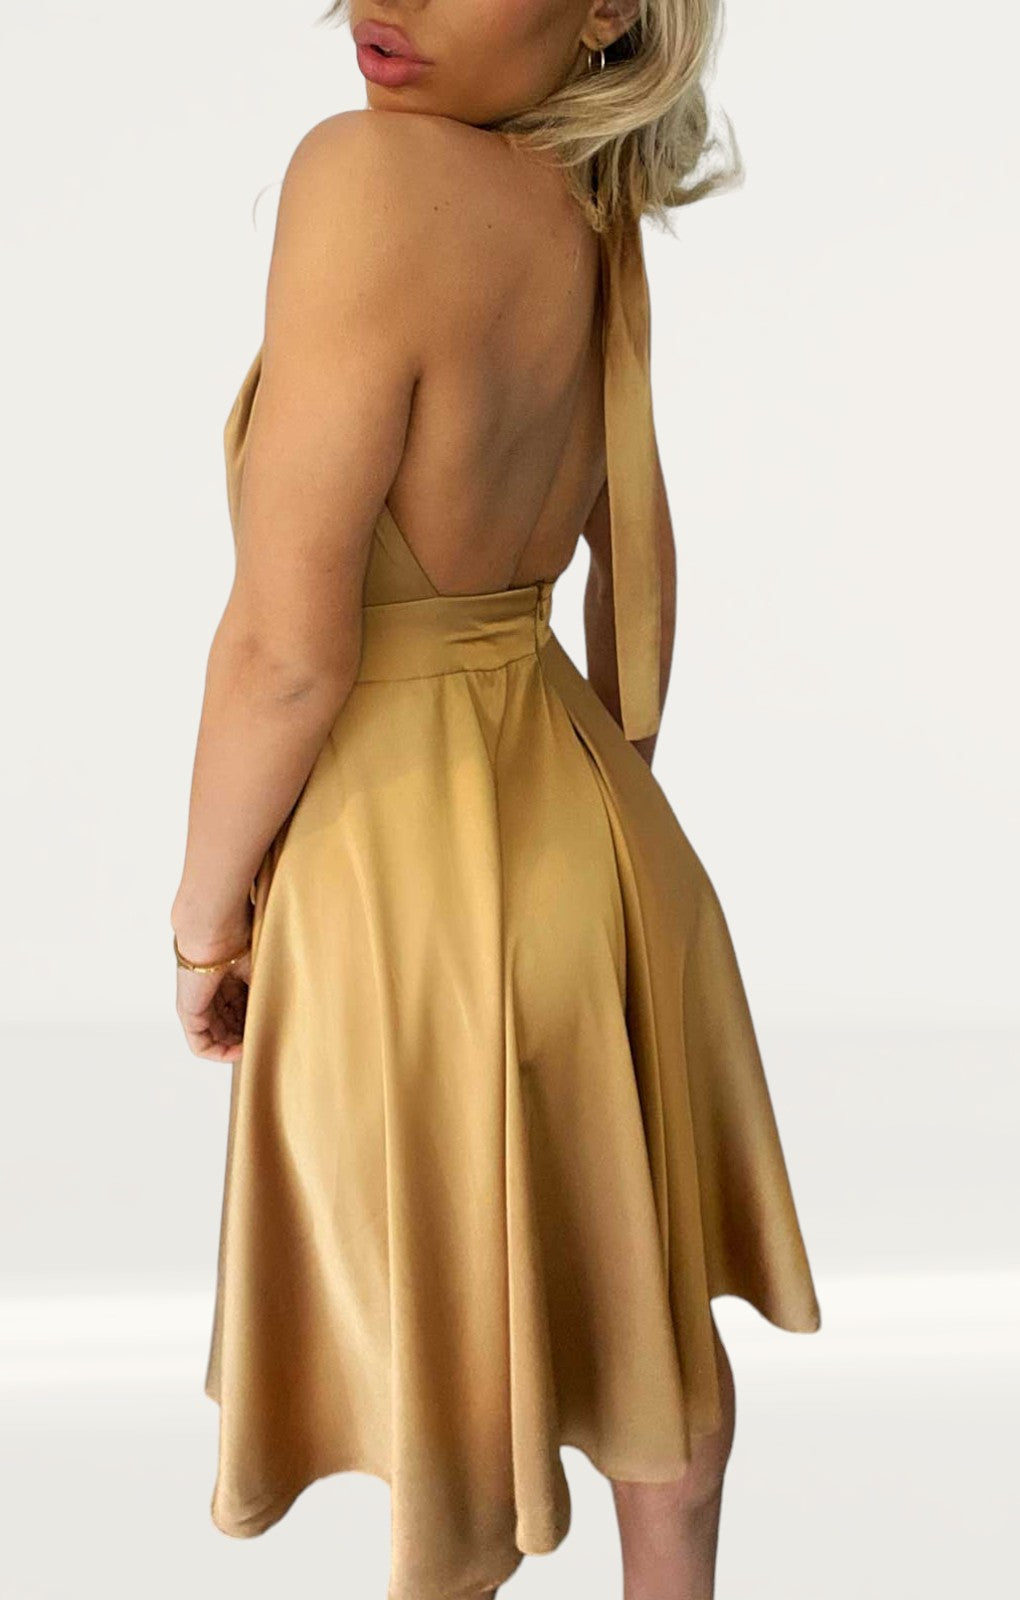 House of Zana Marilyn in Gold Dress